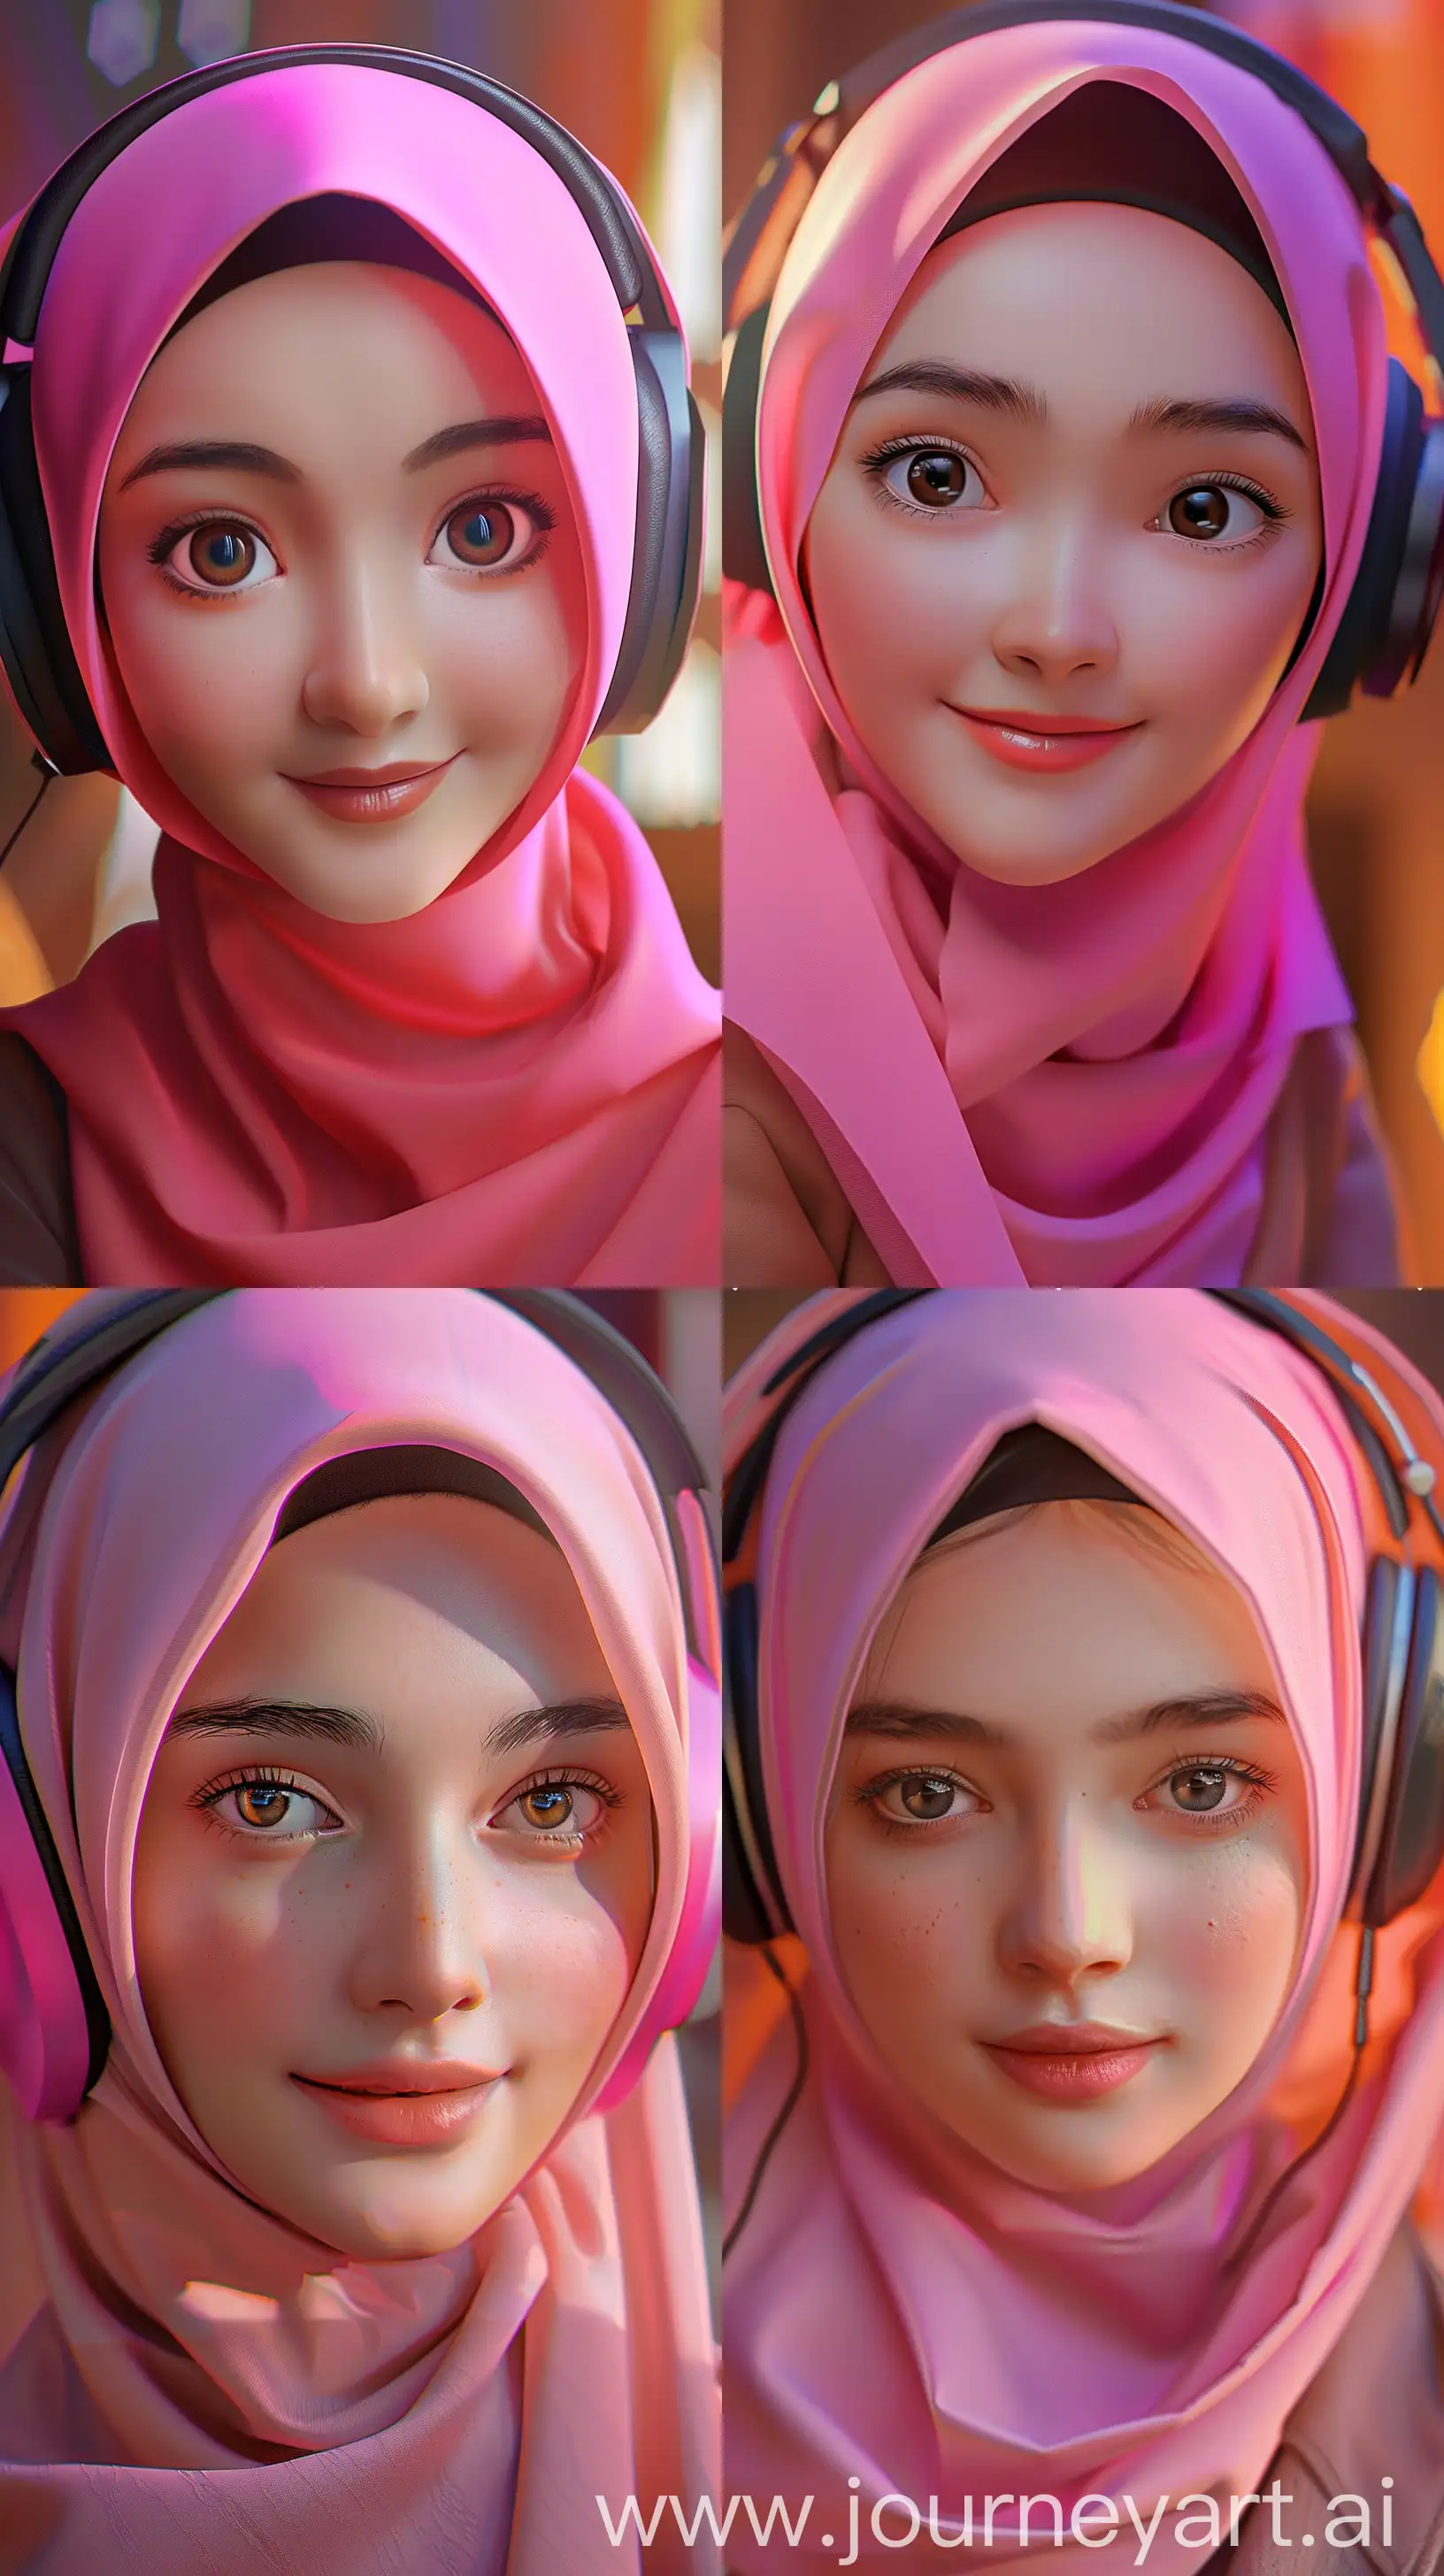 Smiling-Woman-in-Pink-Hijab-Disney-Pixar-Style-Portrait-in-Natural-Lighting